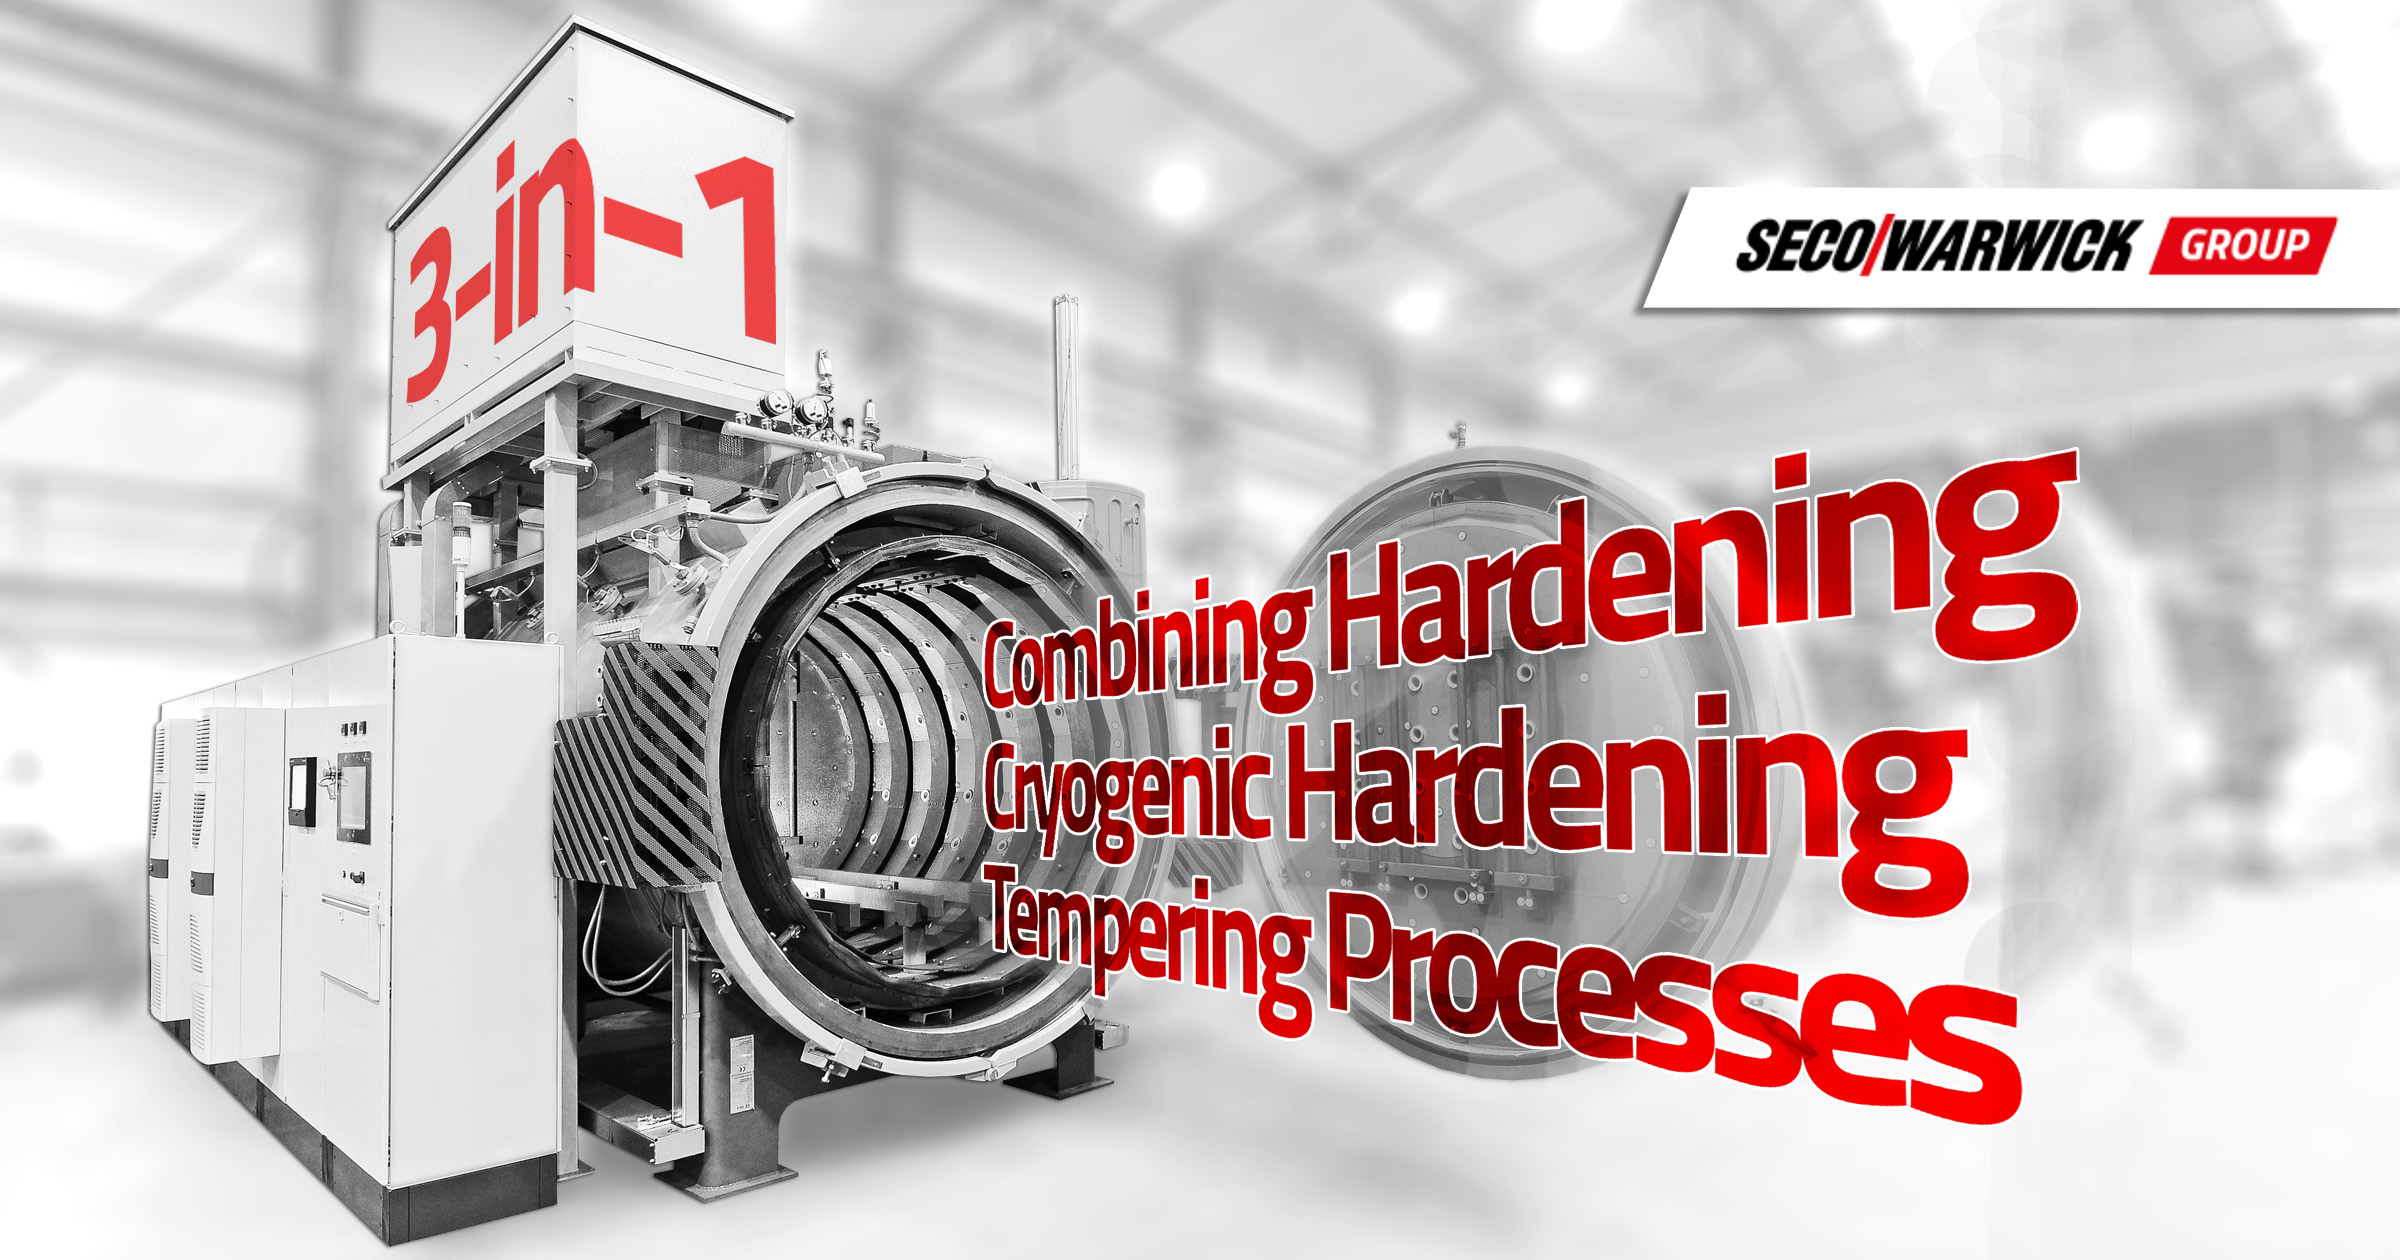 vacuum furnace - the three processes, hardening, tempering, cryogenic hardening